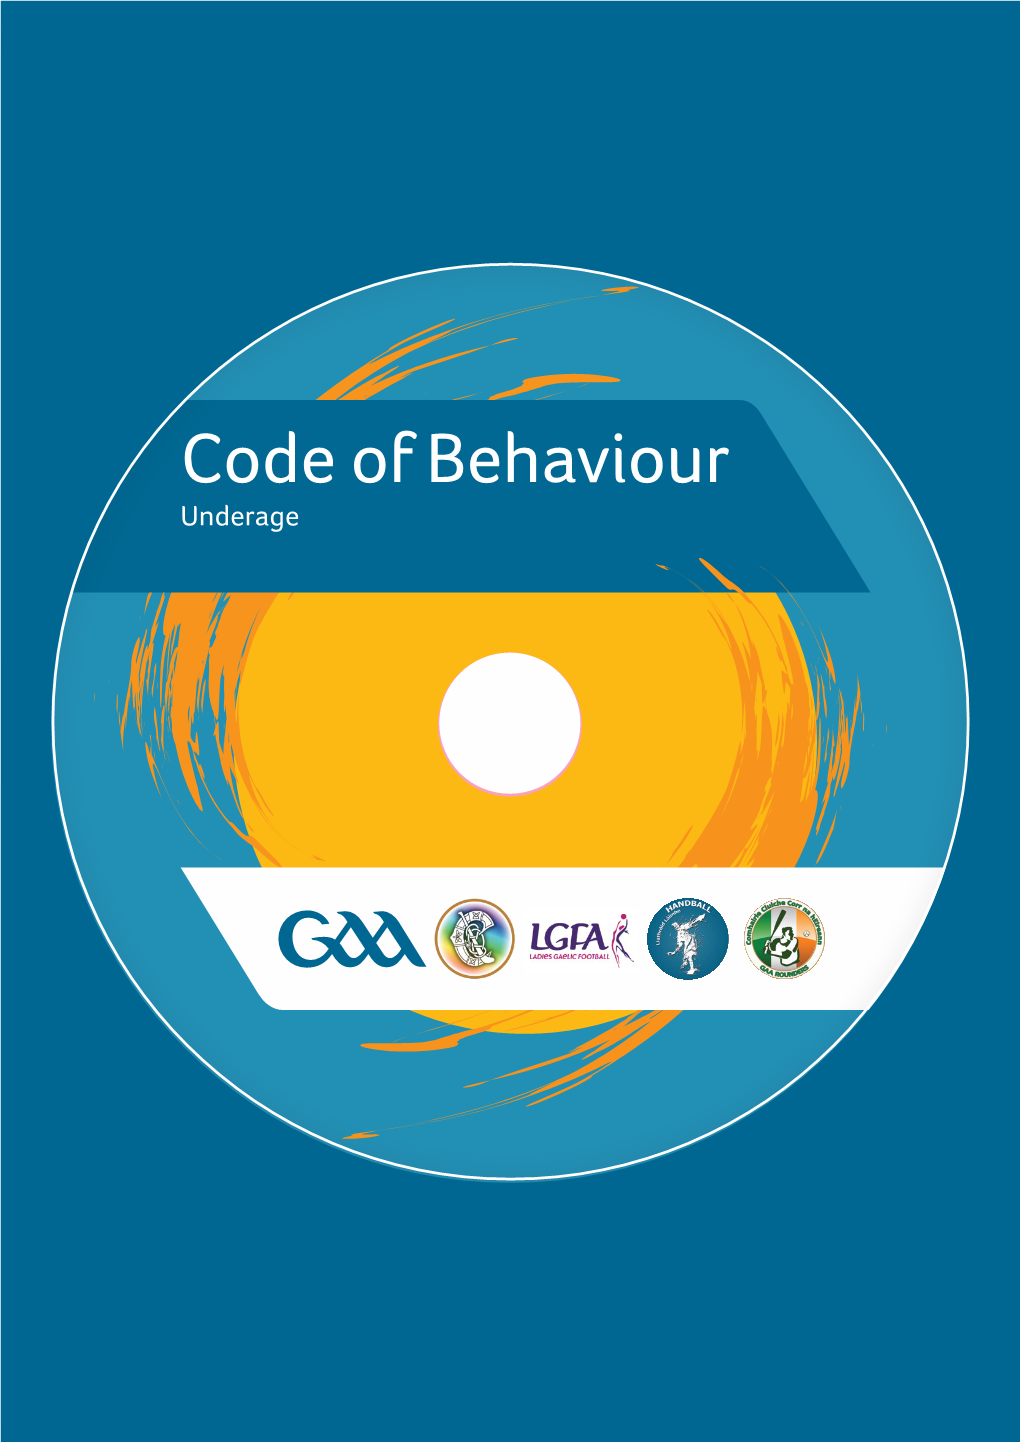 Code of Behaviour (Underage)